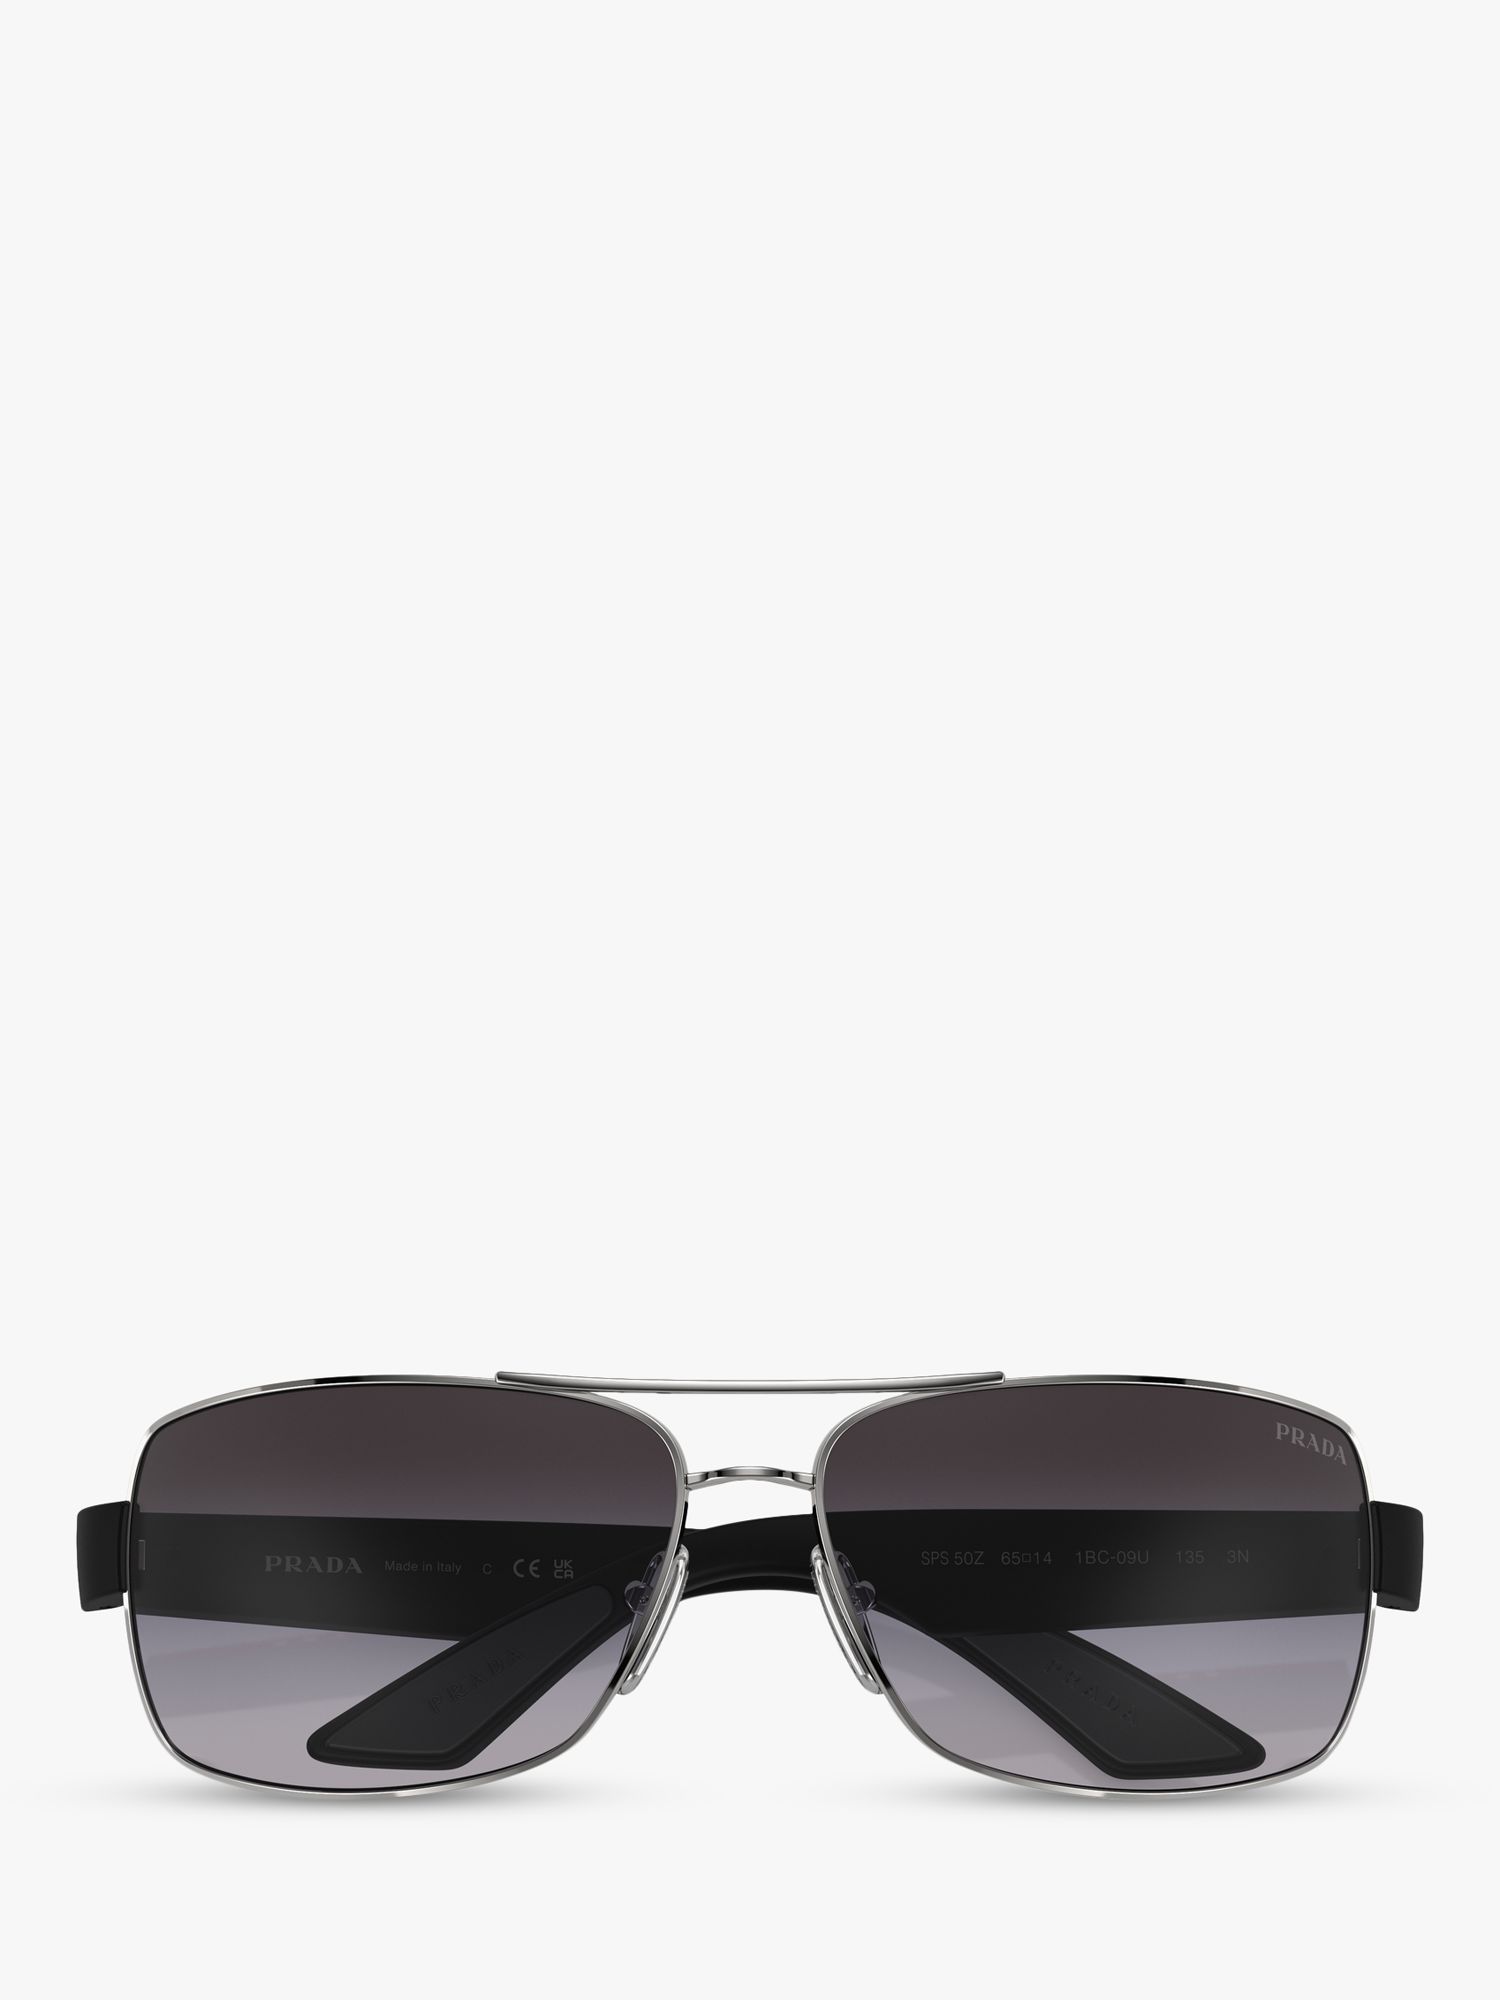 Buy Prada Linea Rossa PS 50ZS Men's Rectangular Sunglasses Online at johnlewis.com